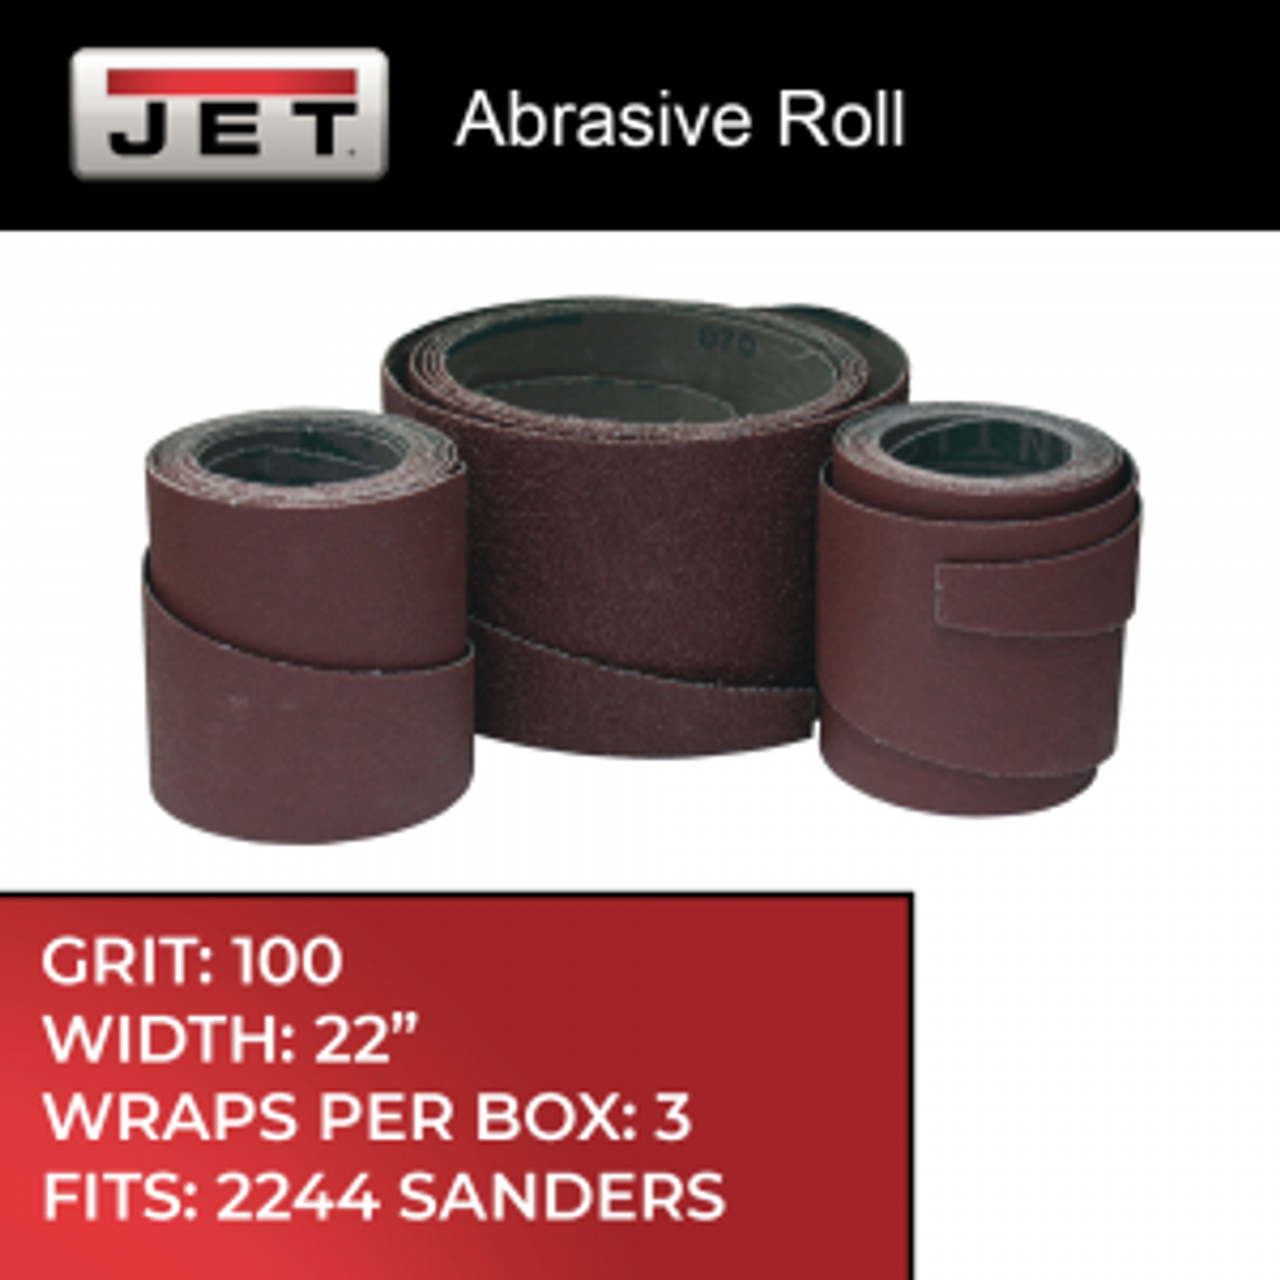 Jet 22" 100 Grit, 3-Wraps in Box 60-2100